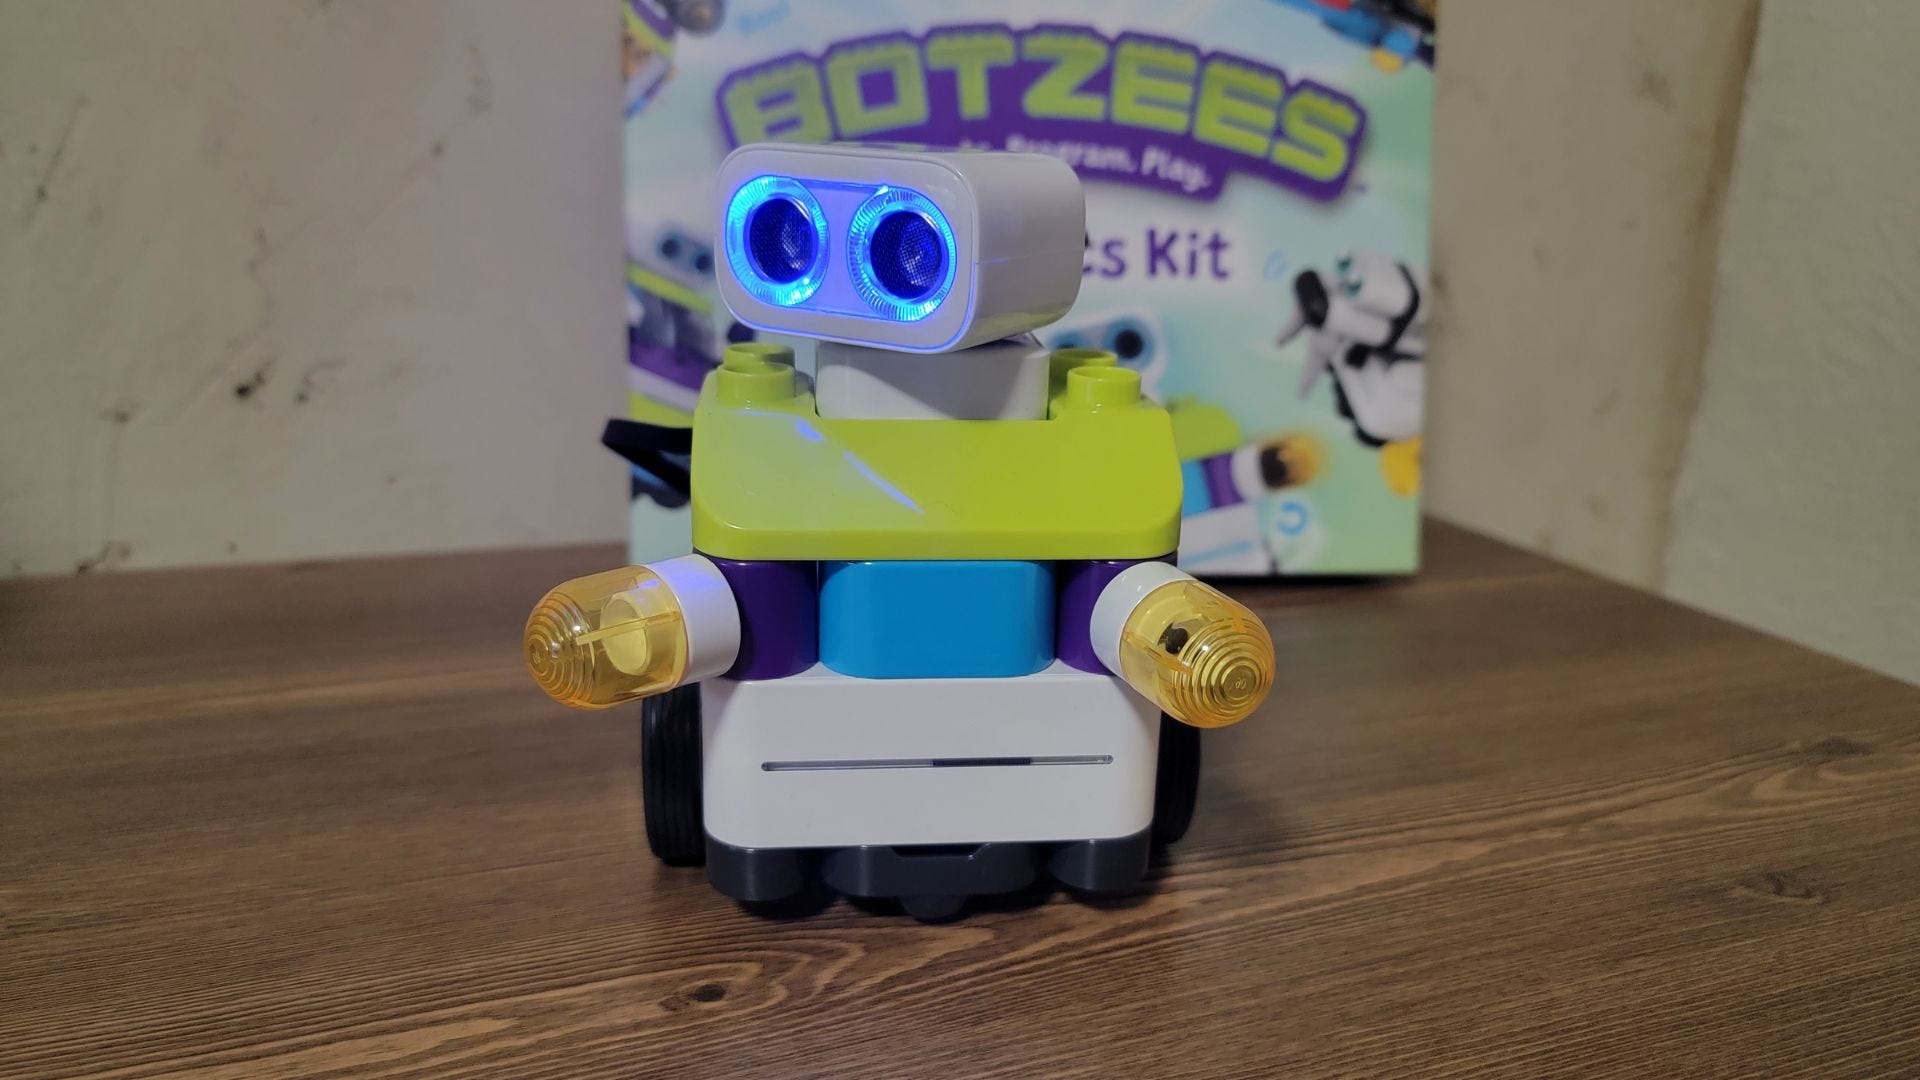 Botzee coding robot sitting up on table